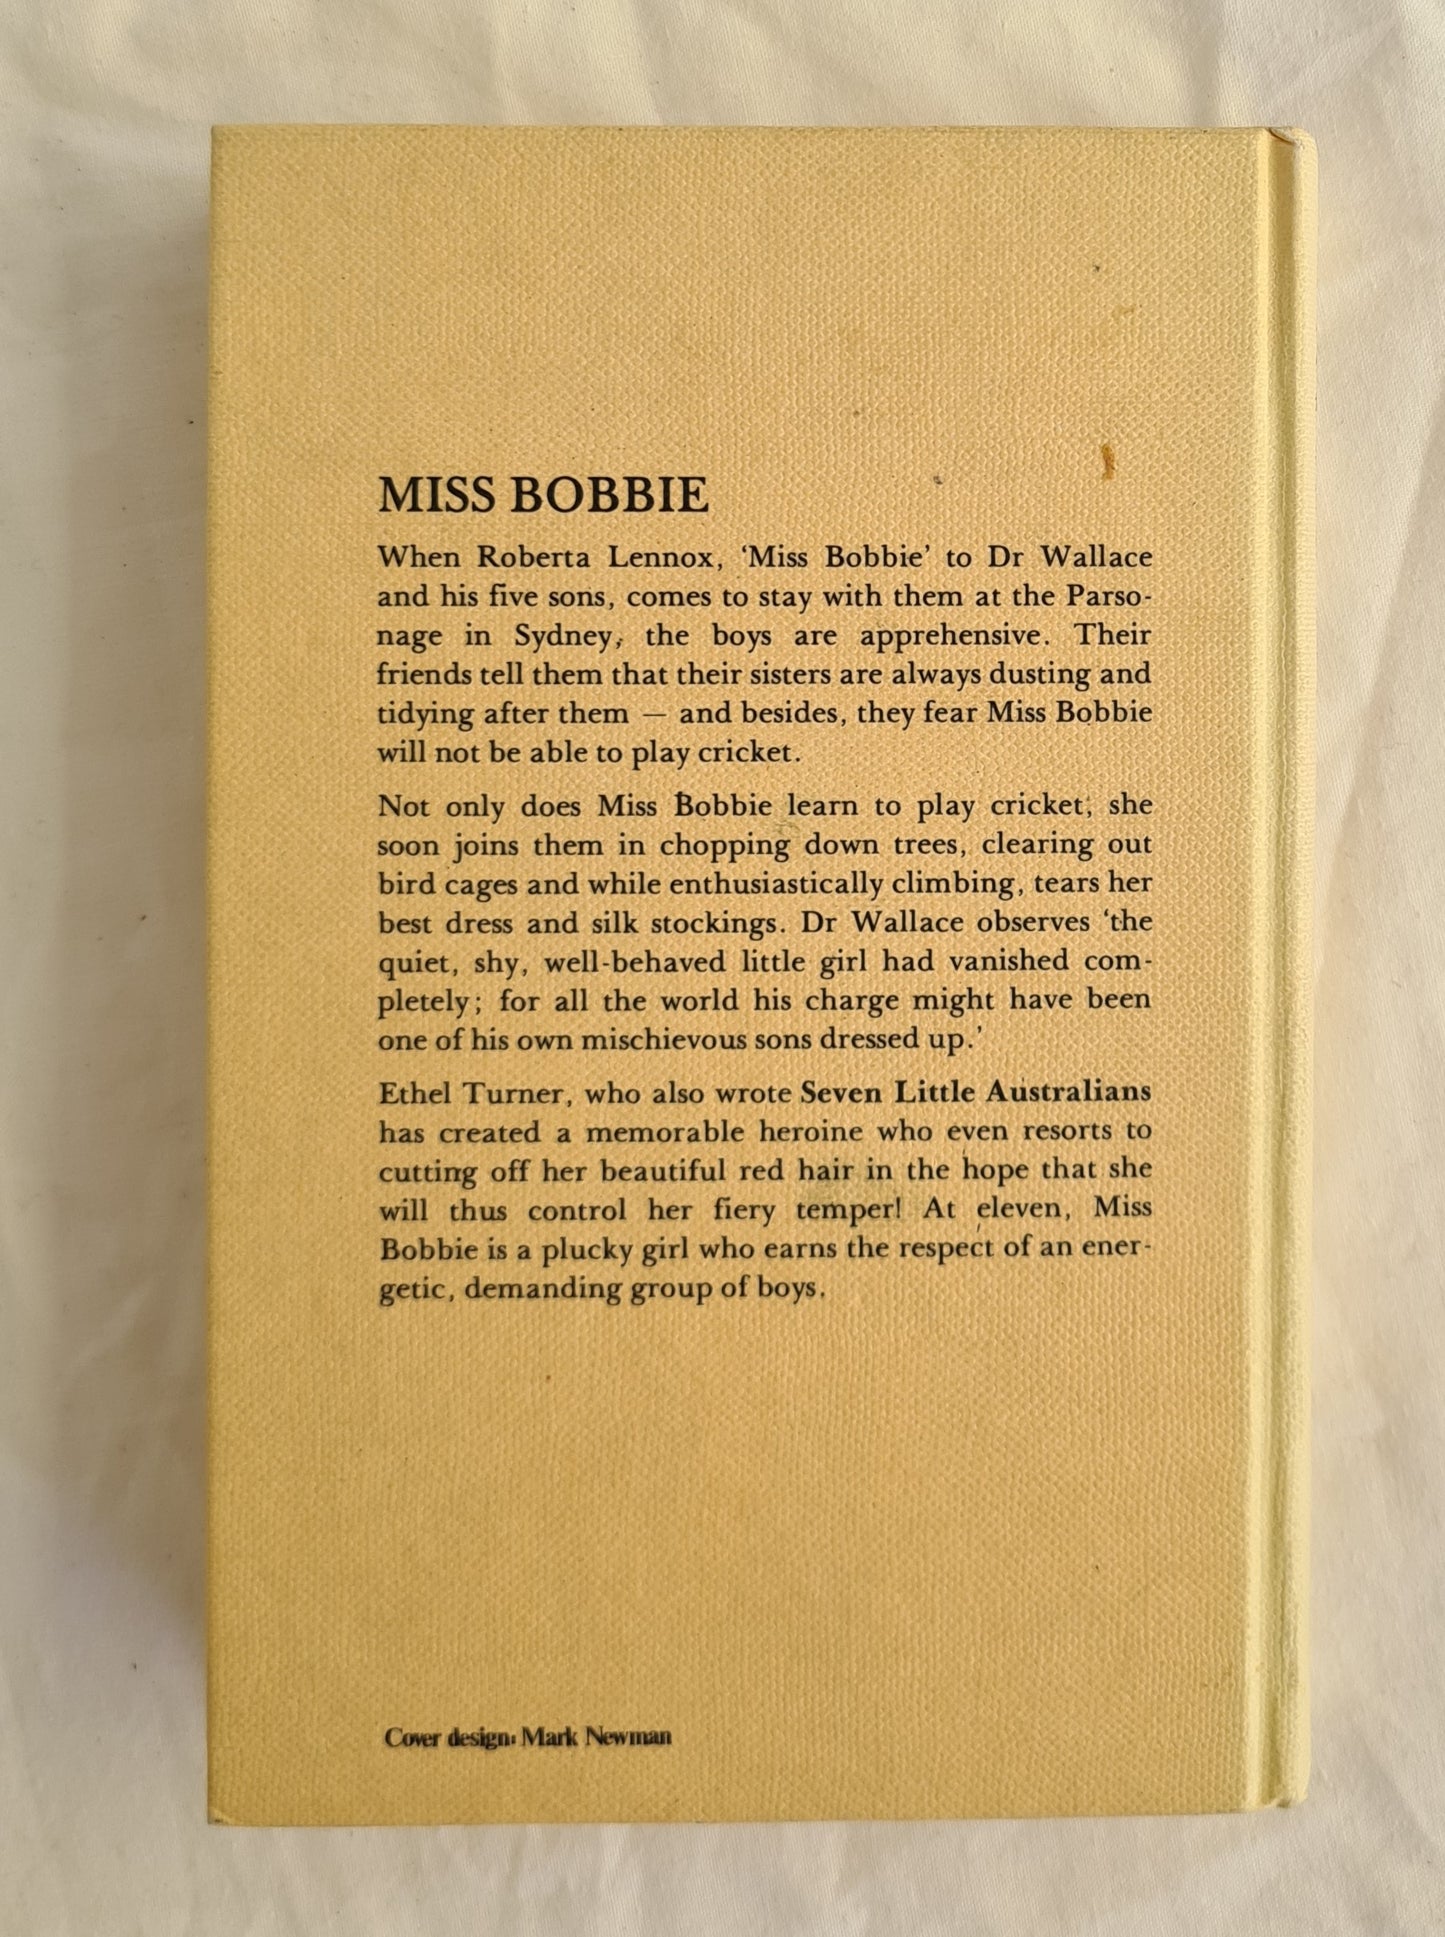 Miss Bobbie by Ethel Turner (1978)